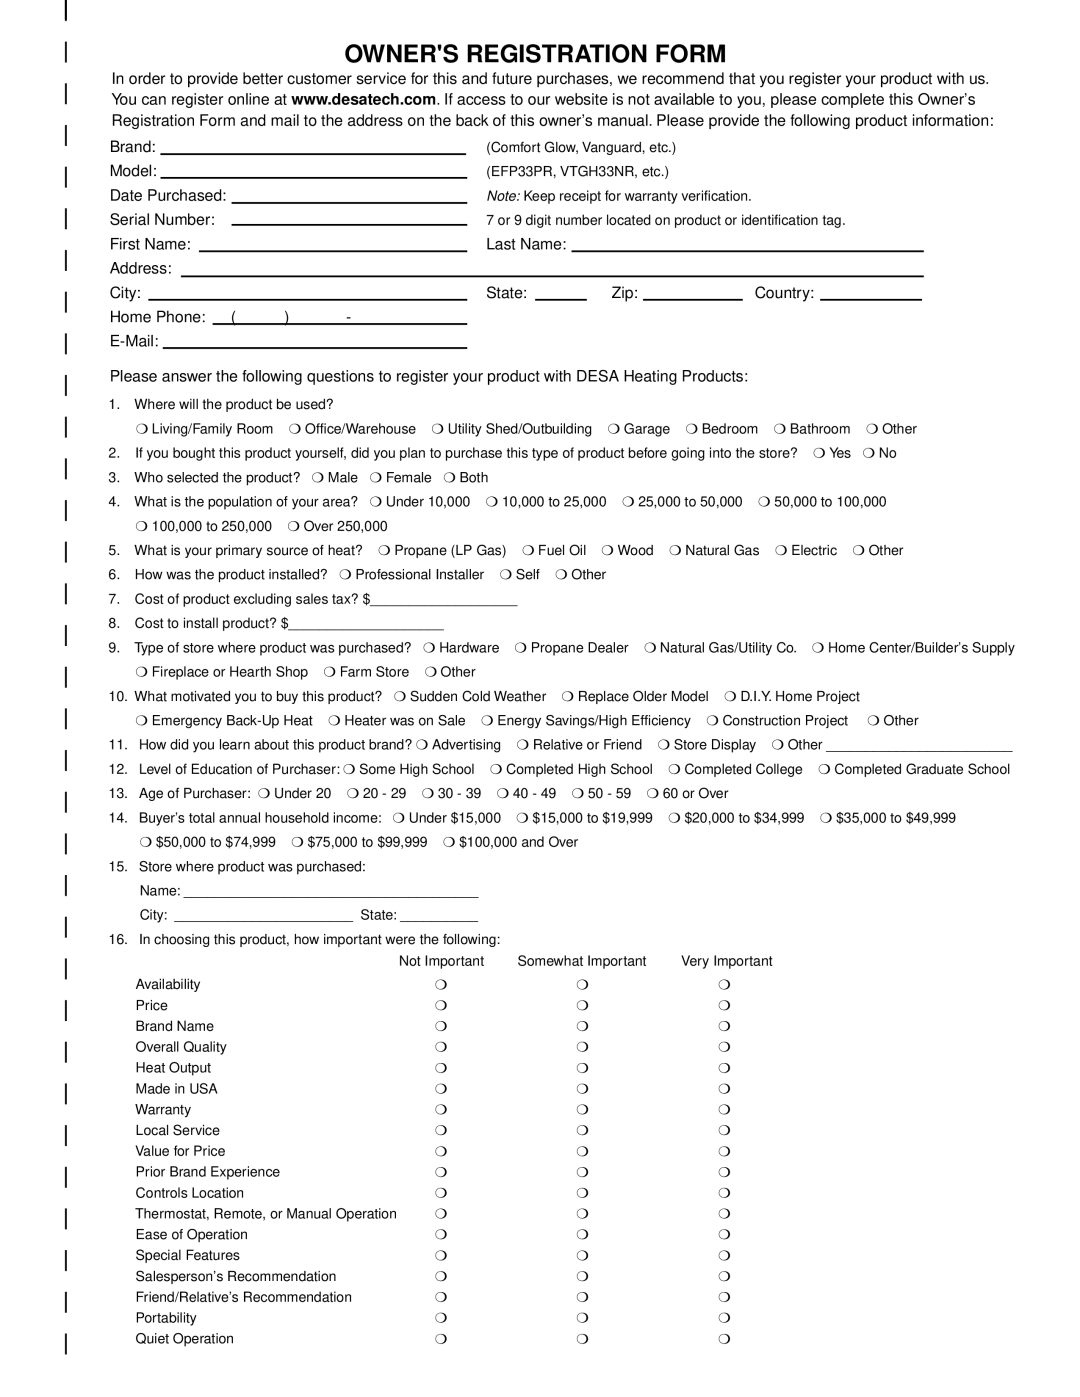 Desa CSG3930NR, CSG3930PR installation manual Owners Registration Form 